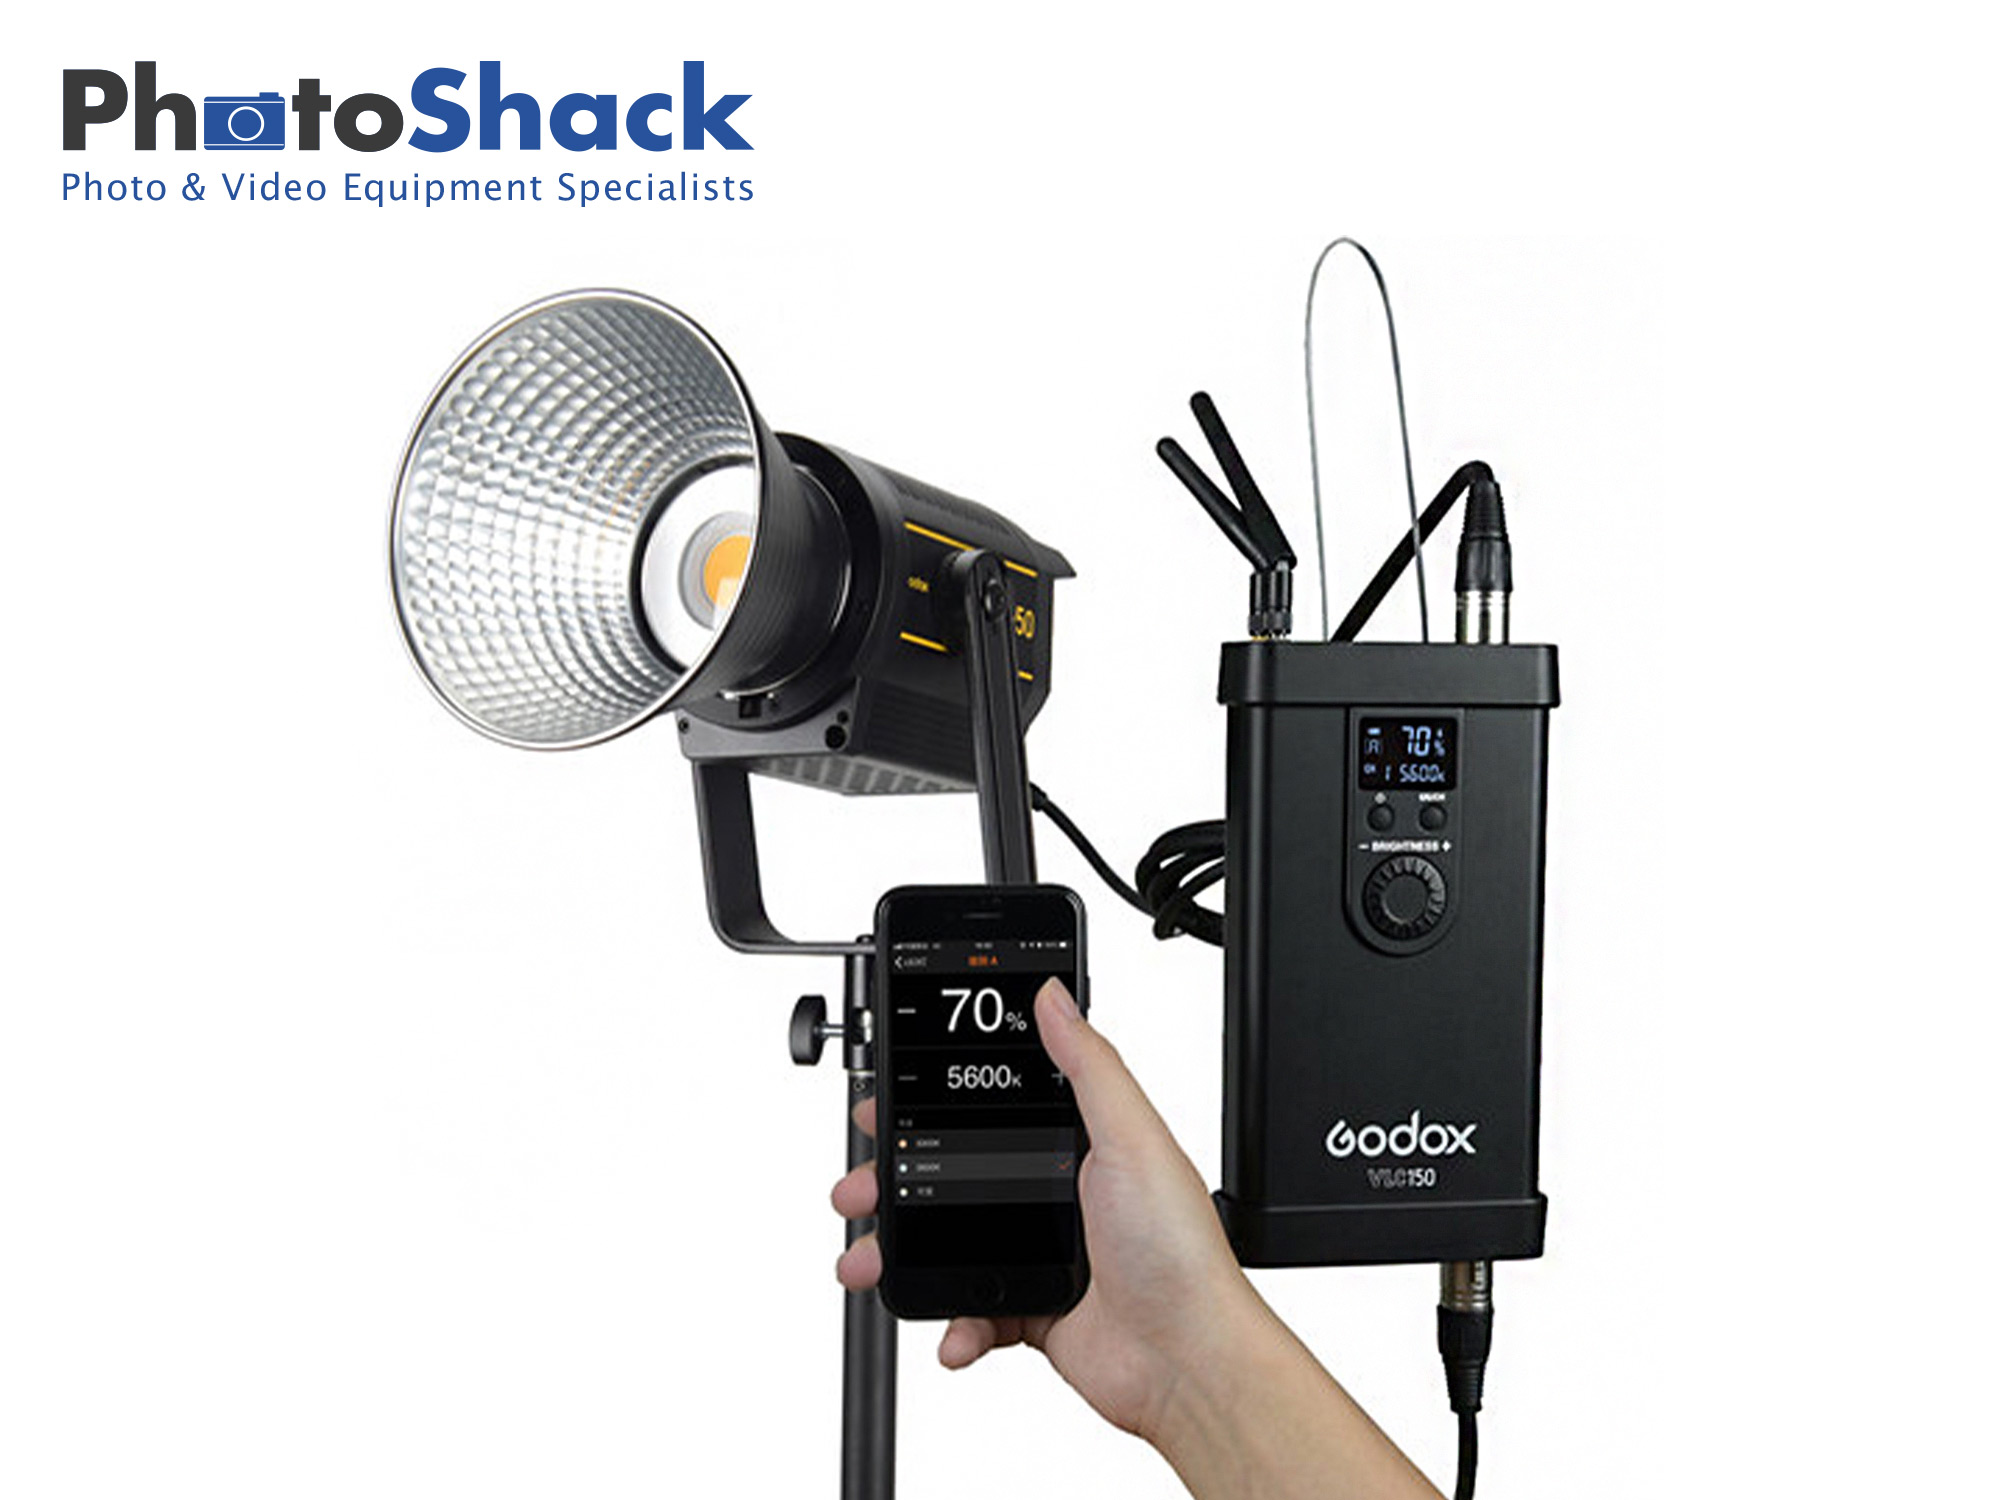 Godox VL150 150W LED Video Light